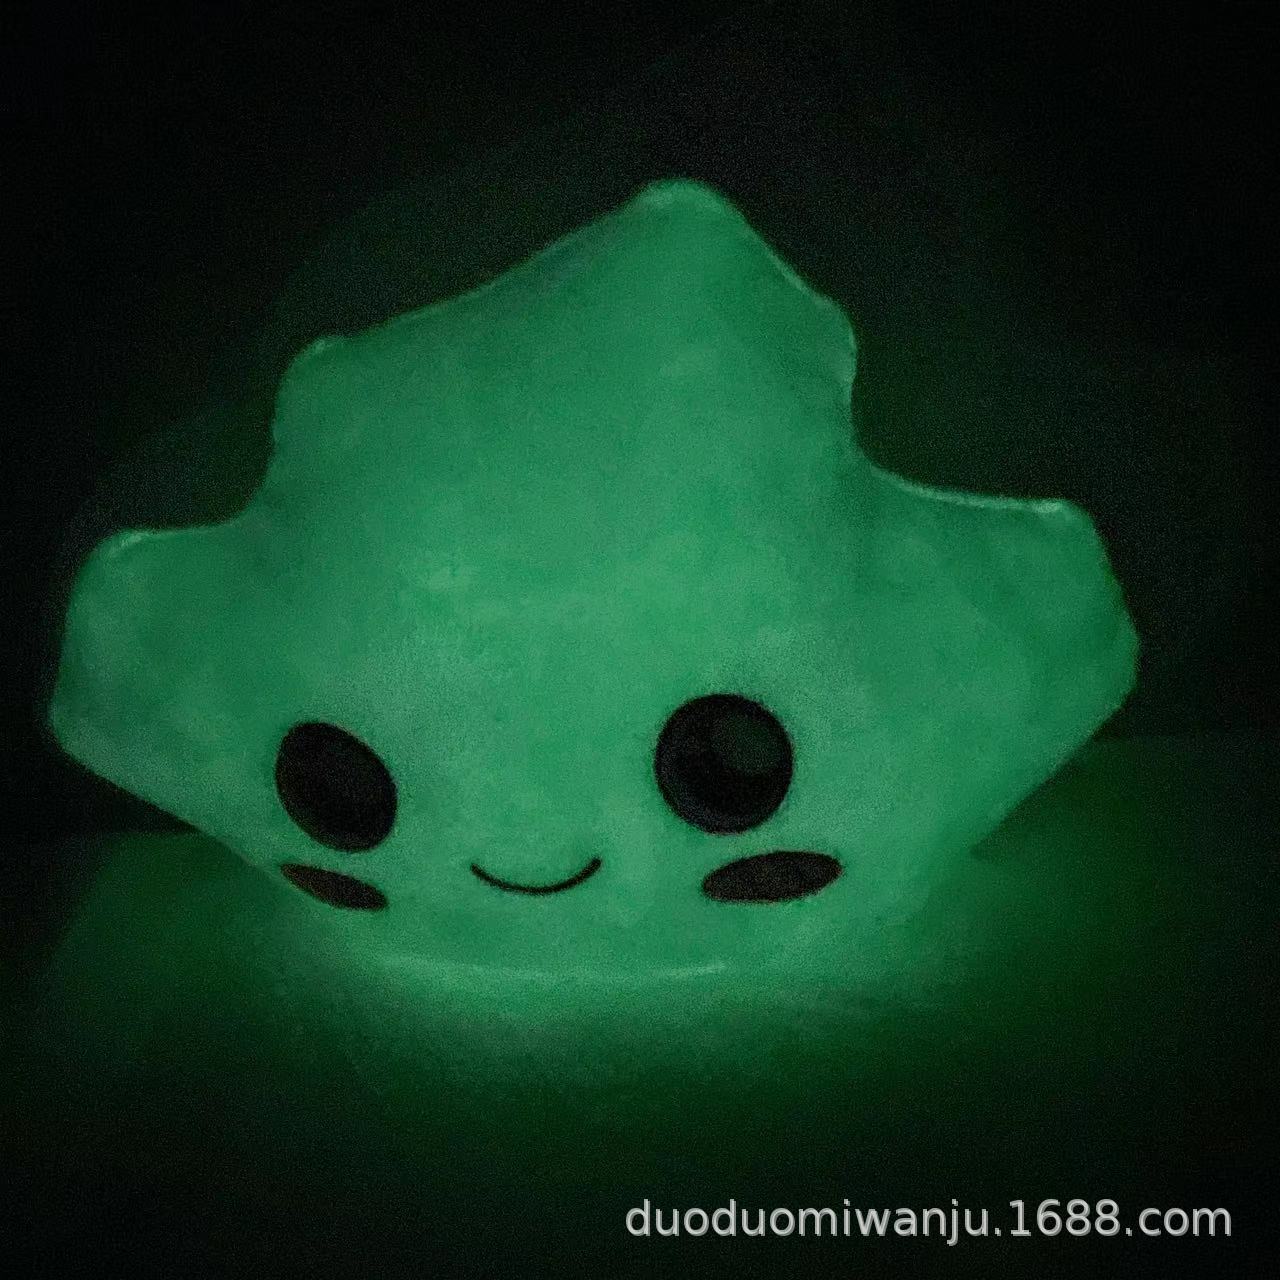 Luminous Ghost Plush Toys